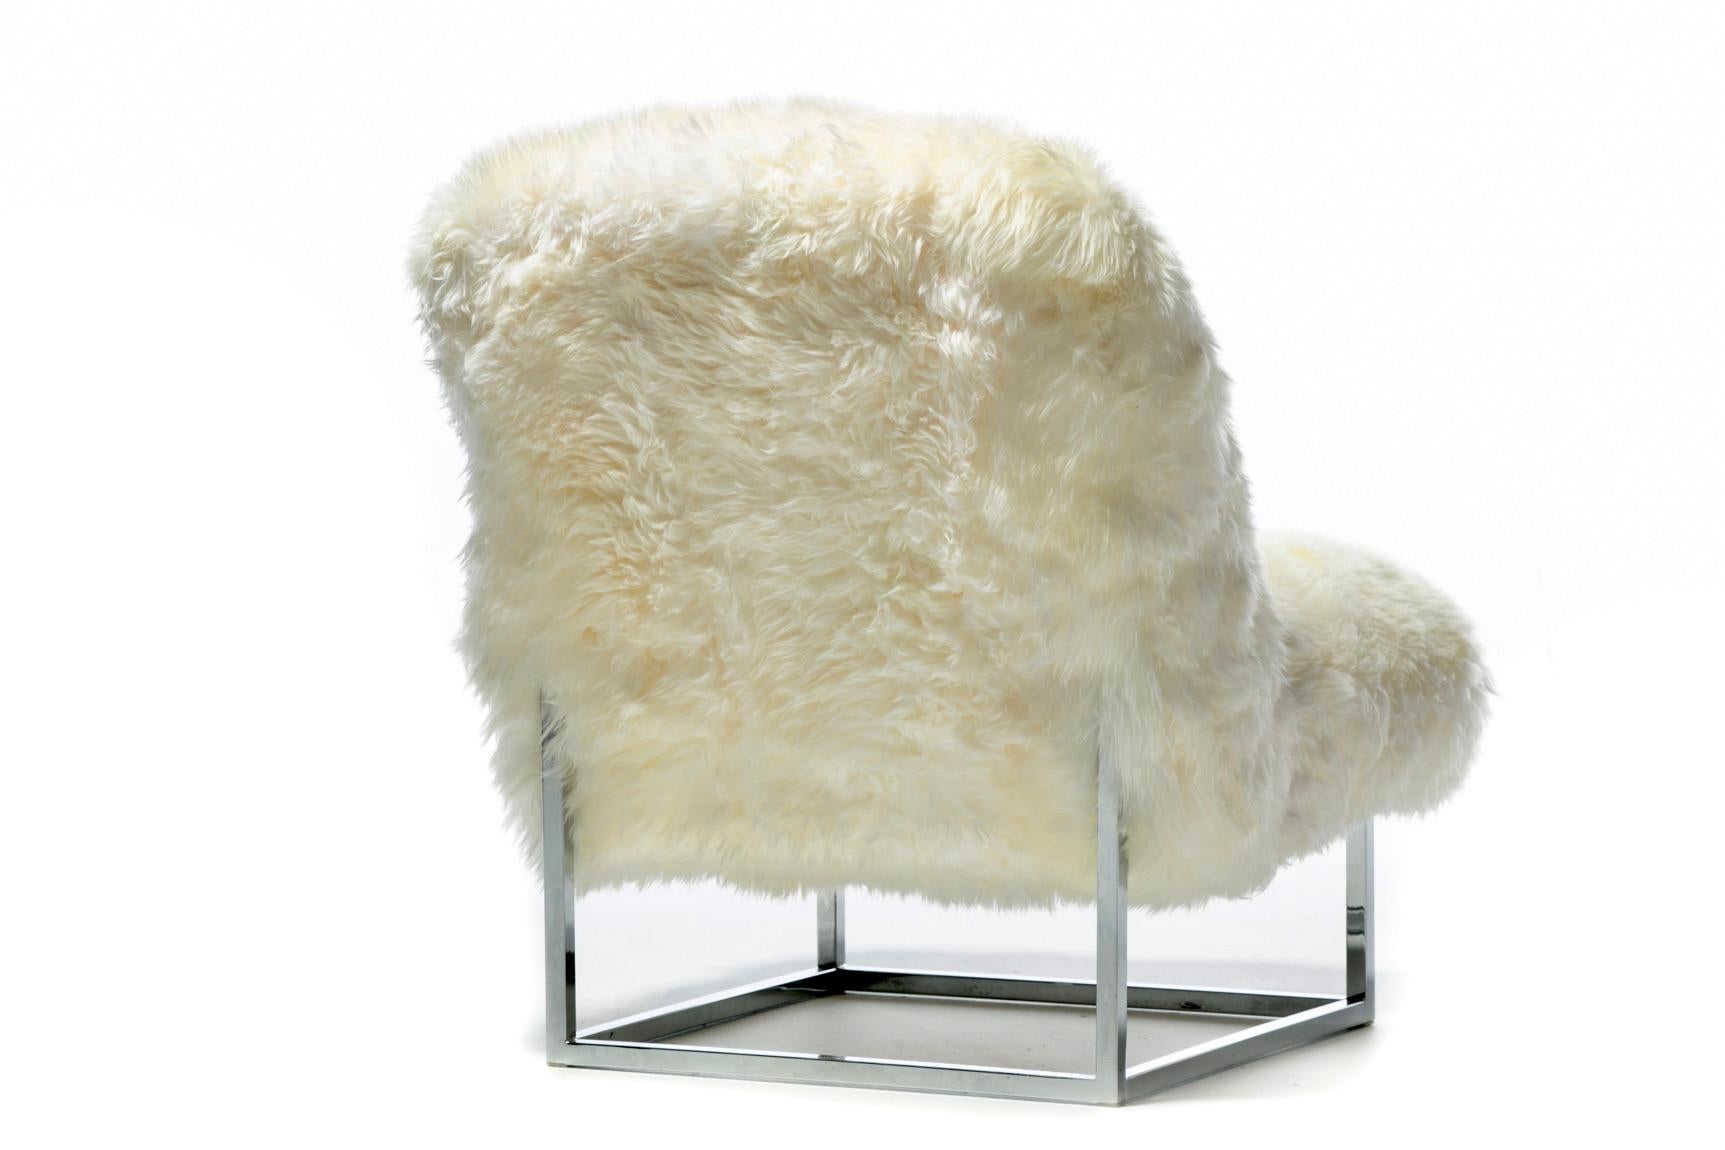 Pair of Milo Baughman Style Sheepskin & Chrome Slipper Chairs c. 1970s For Sale 1